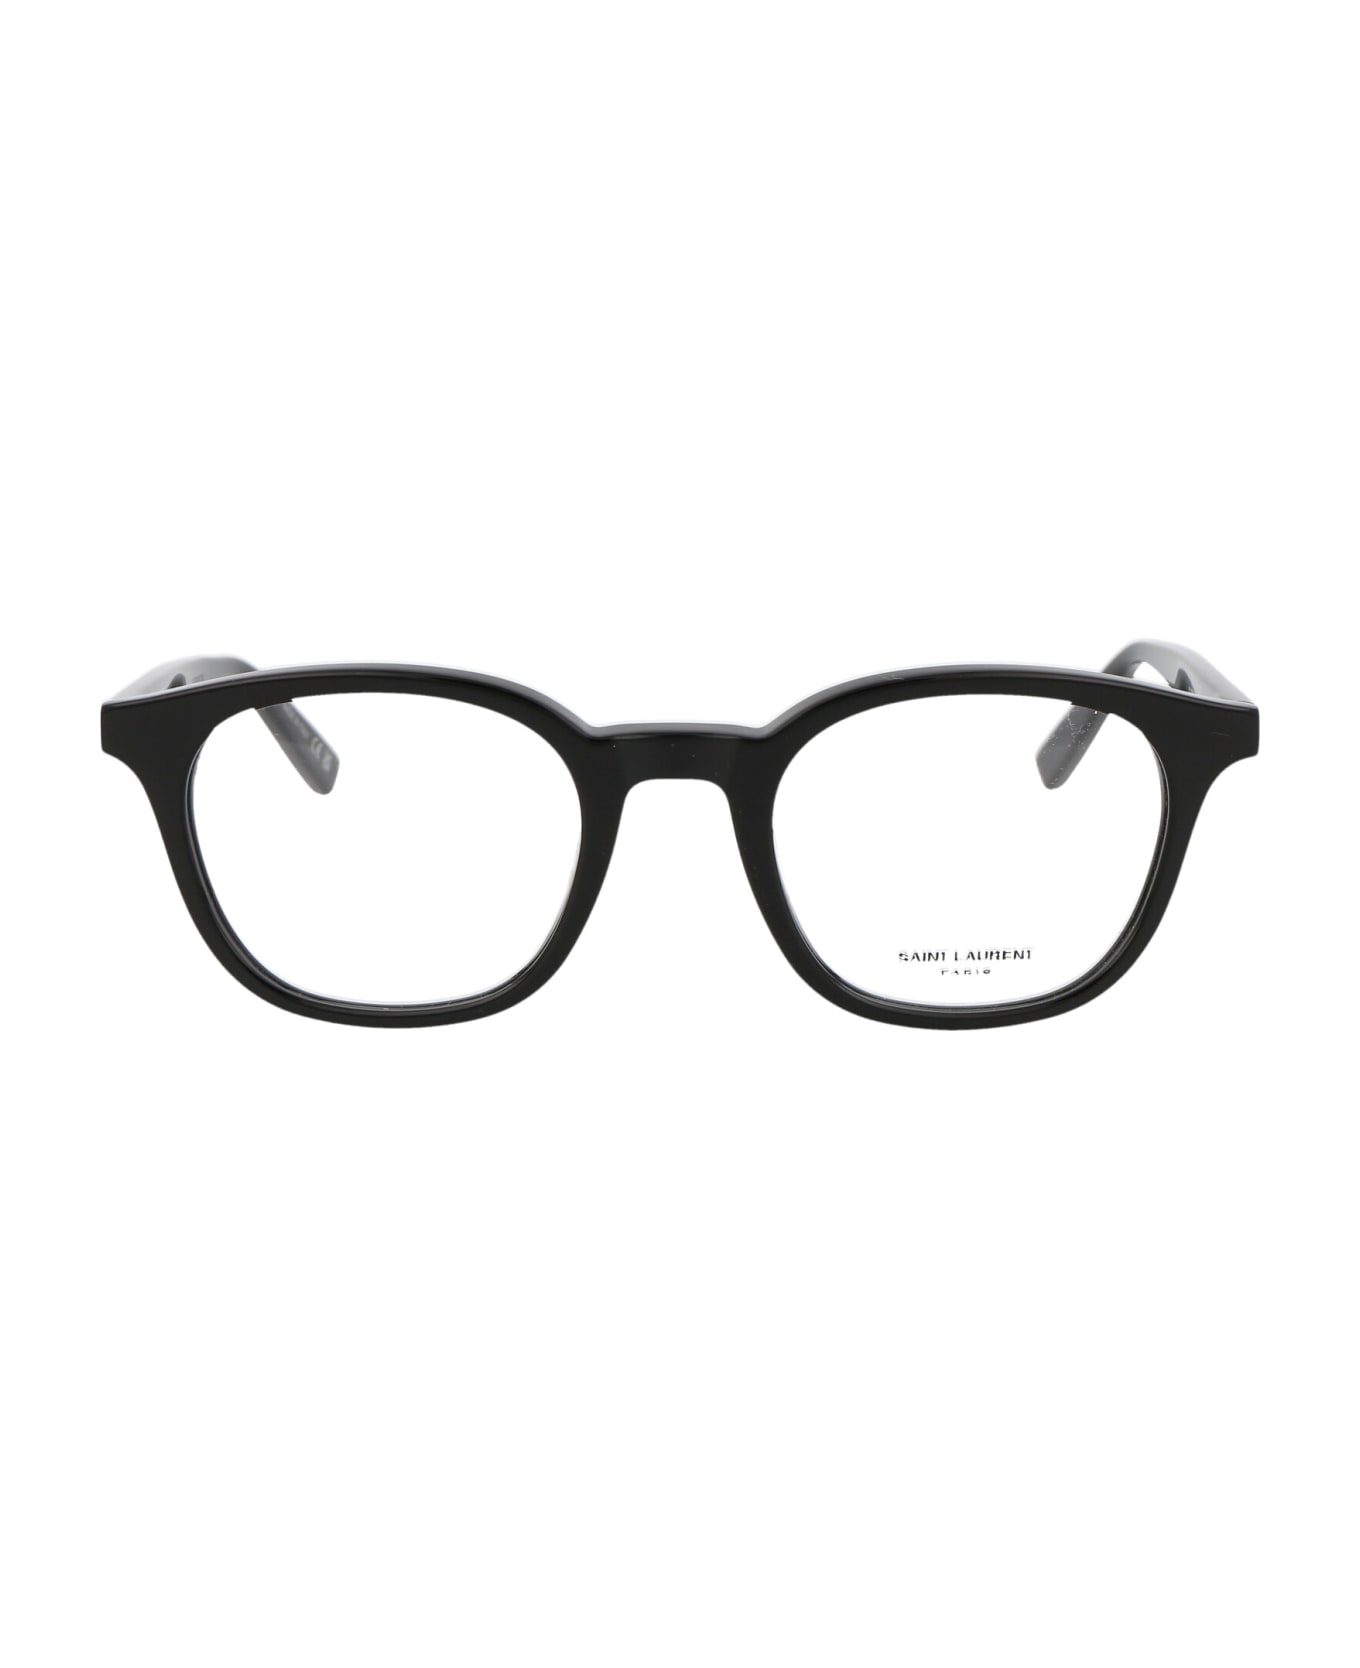 Saint Laurent Eyewear Sl 588 Glasses - 001 BLACK BLACK TRANSPARENT